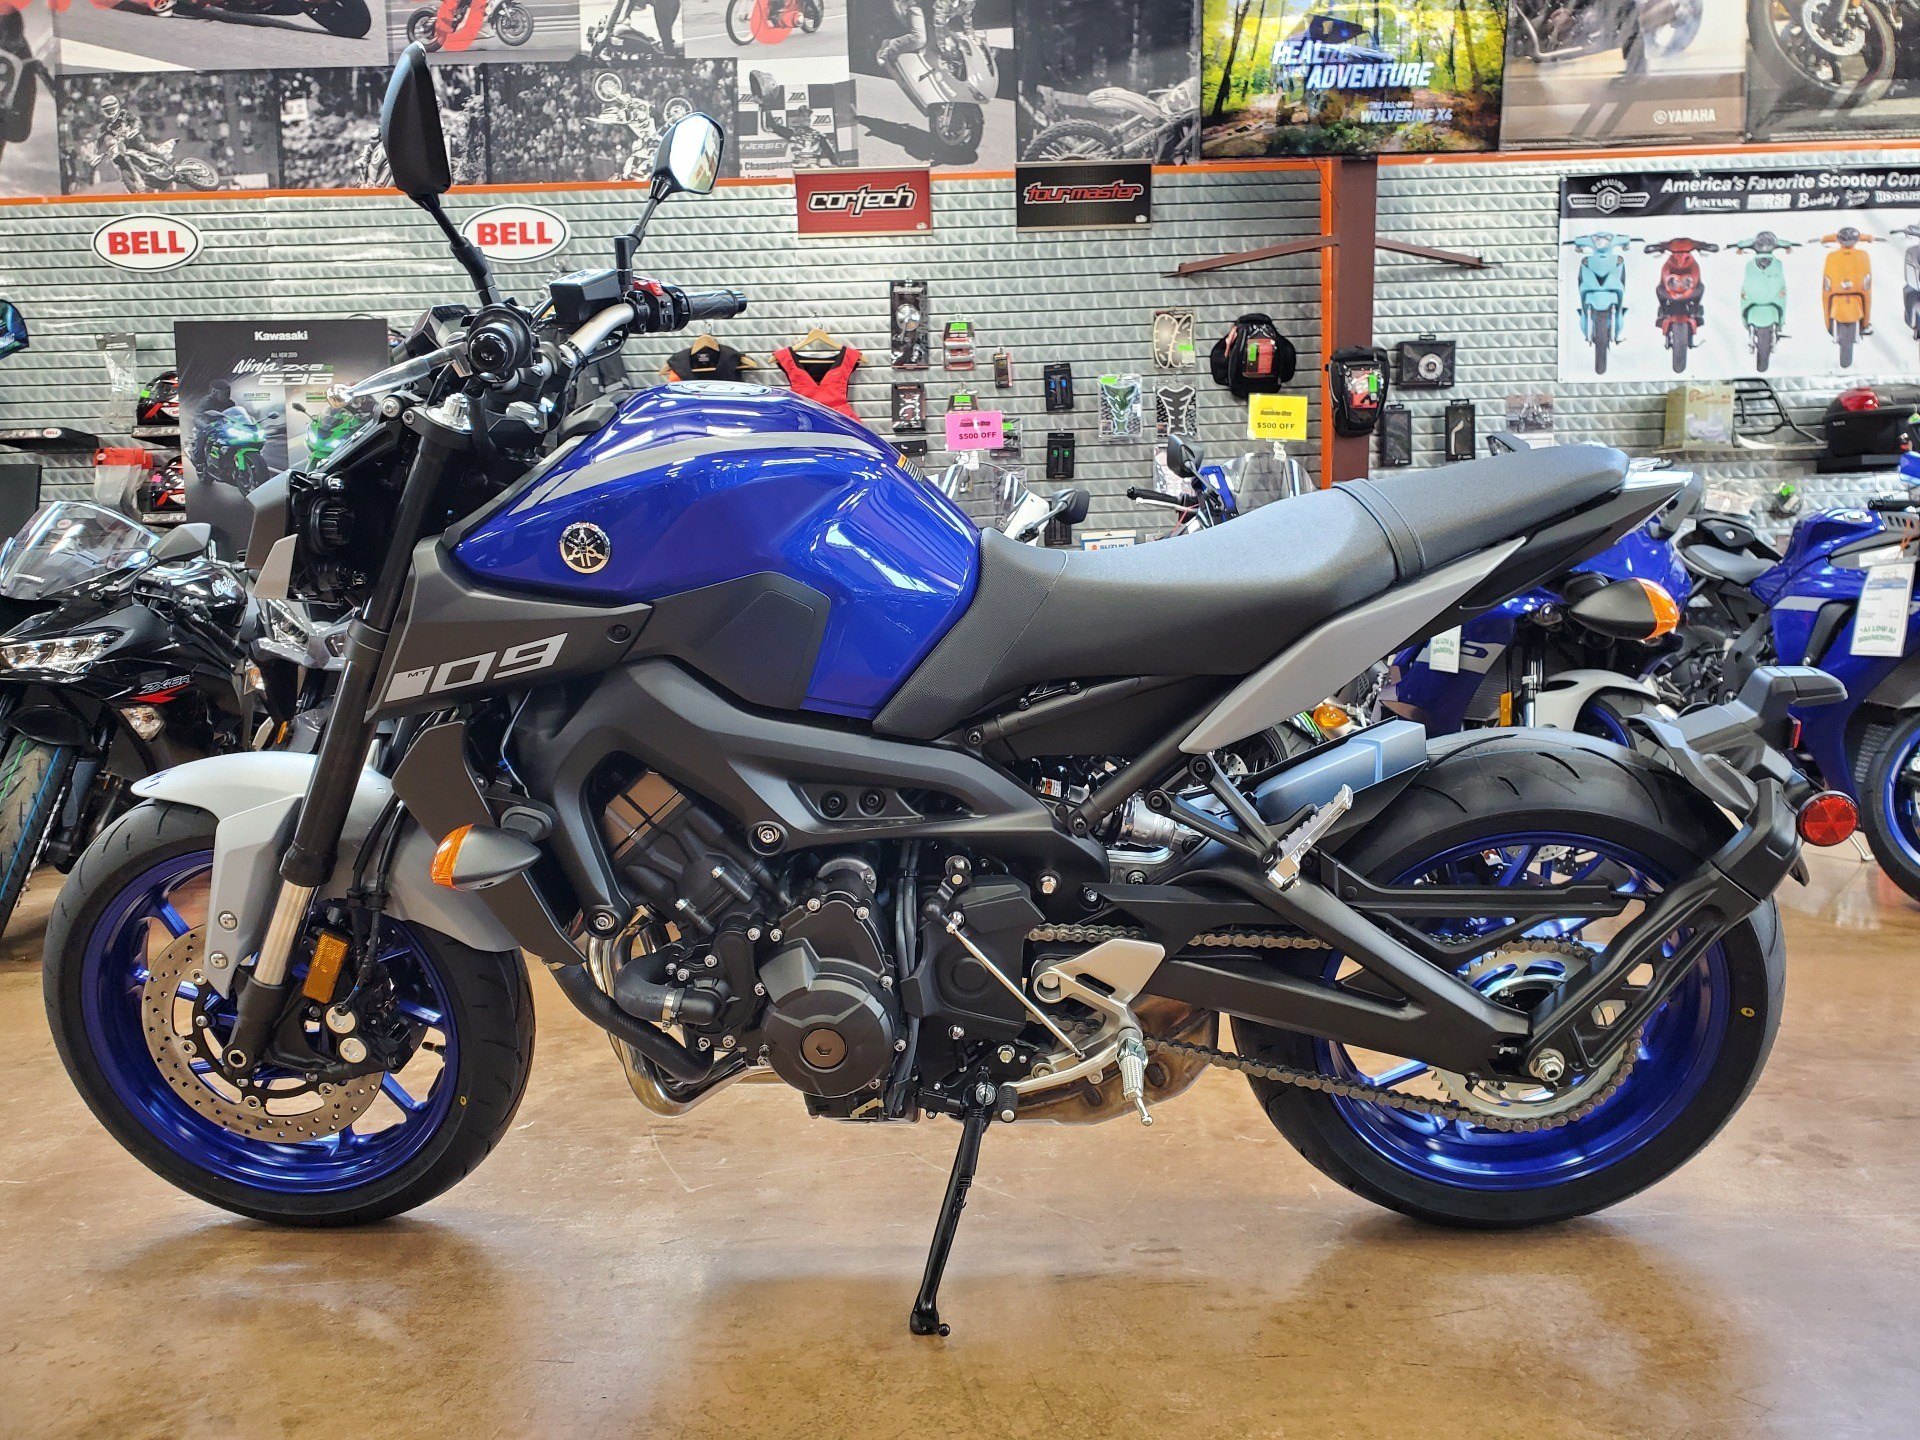 2020 Yamaha MT-09 Motorcycles - Nadon Sport